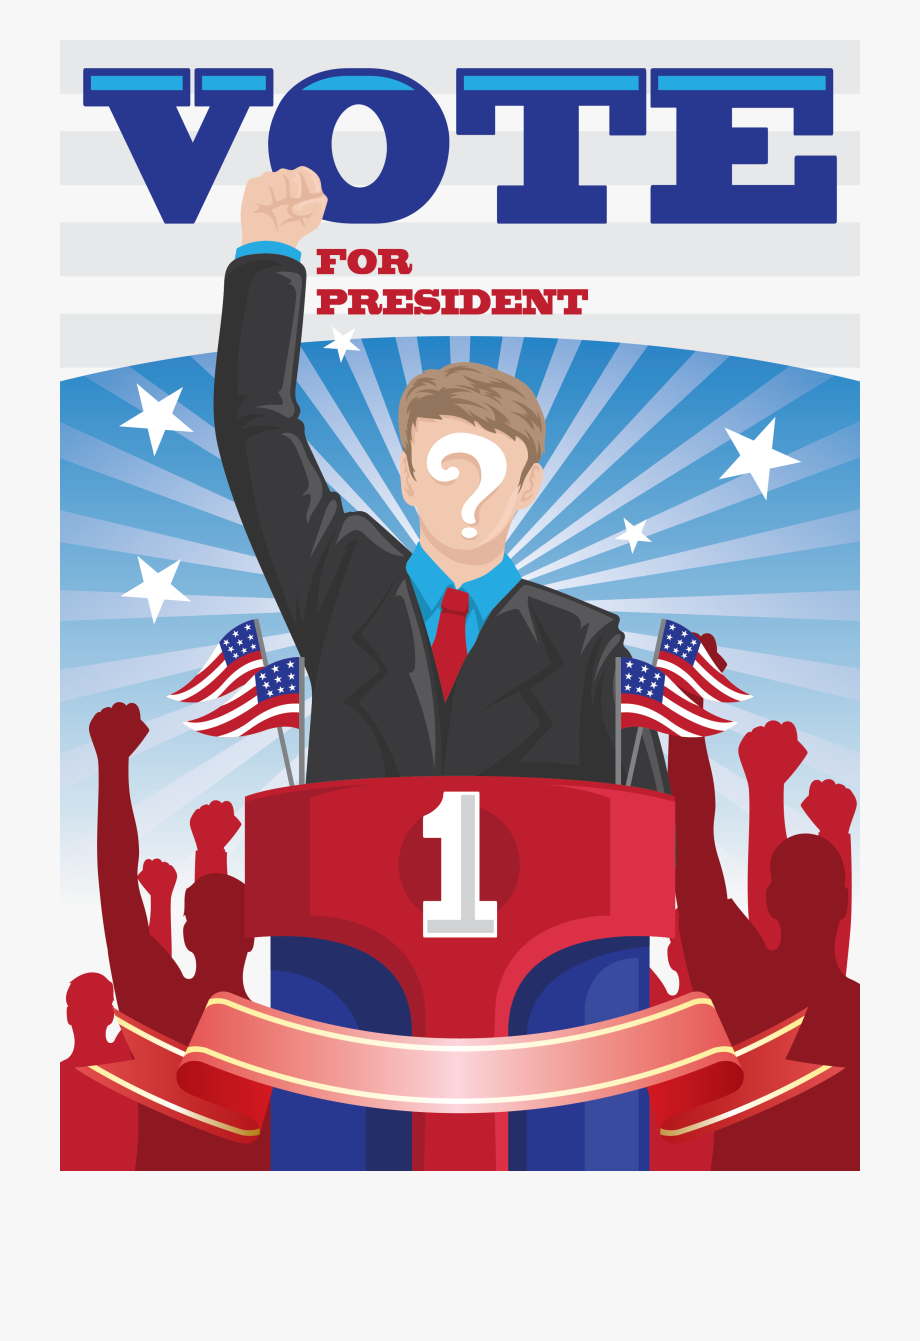 Presidential vote for poster. Voting clipart president